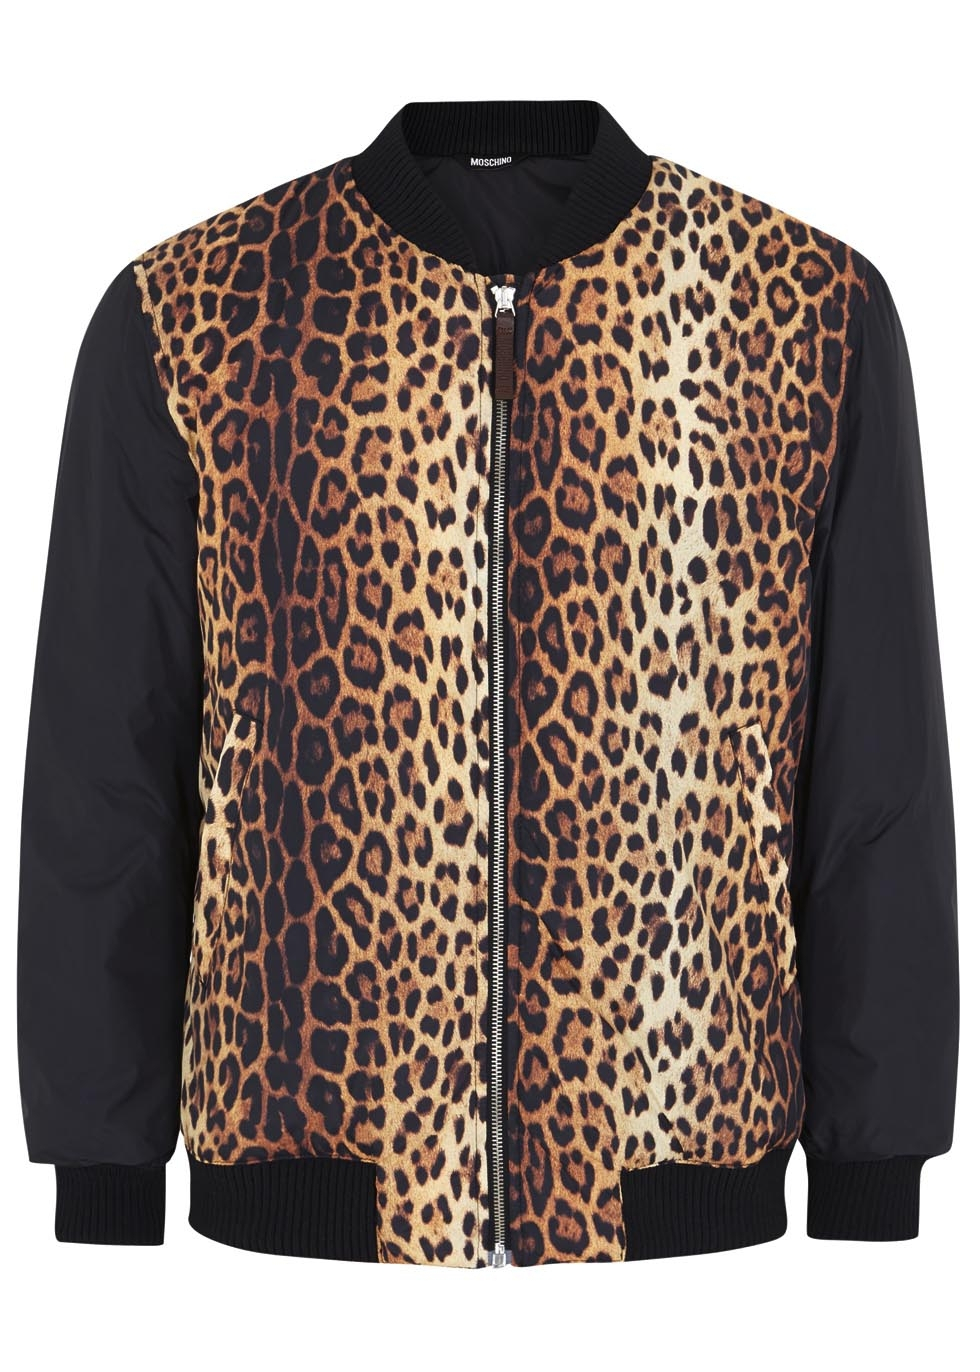 Moschino Black Leopard Print Shell Bomber Jacket in Animal for Men ...